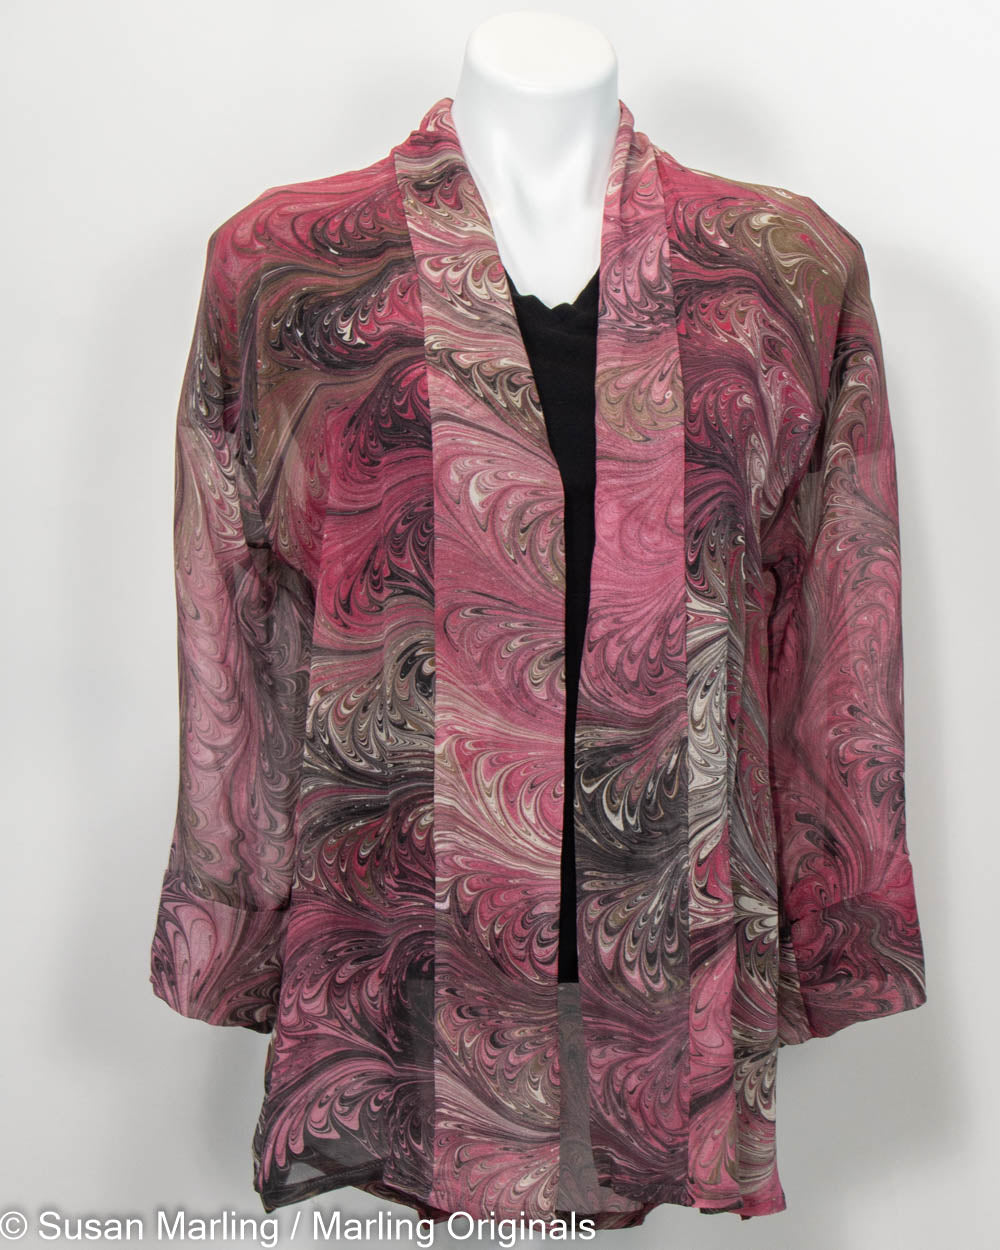 sheer silk kimono in rich cranberry tones